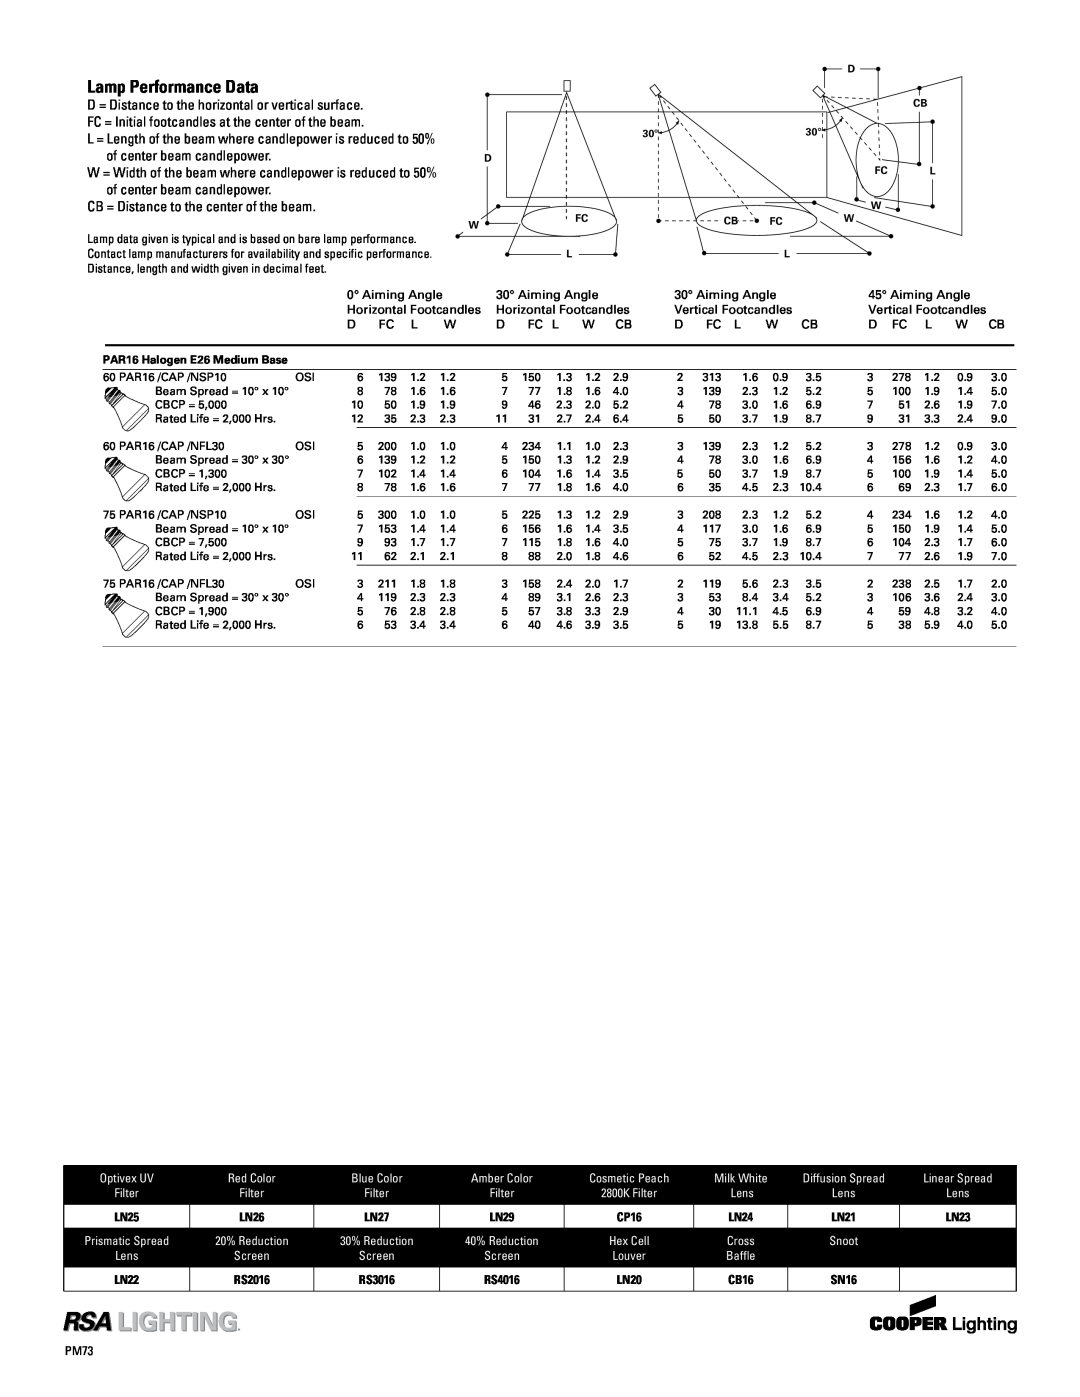 Cooper Lighting PM221cb, PM621cb, PM421cb, PM121cb specifications Lamp Performance Data 